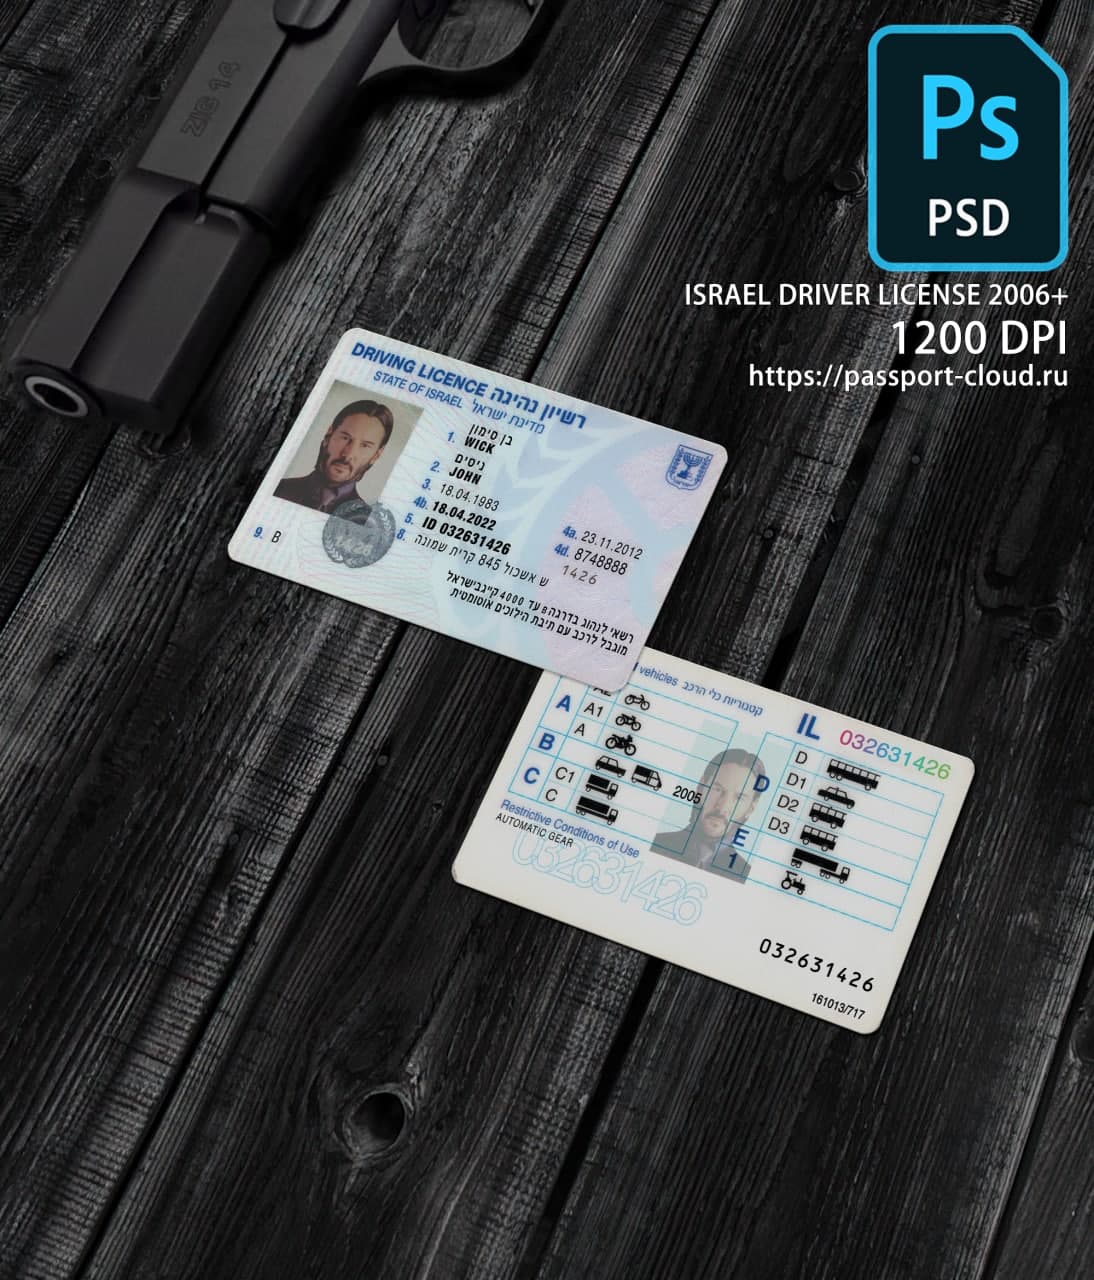 Israel Driver License 2006+ PSD1